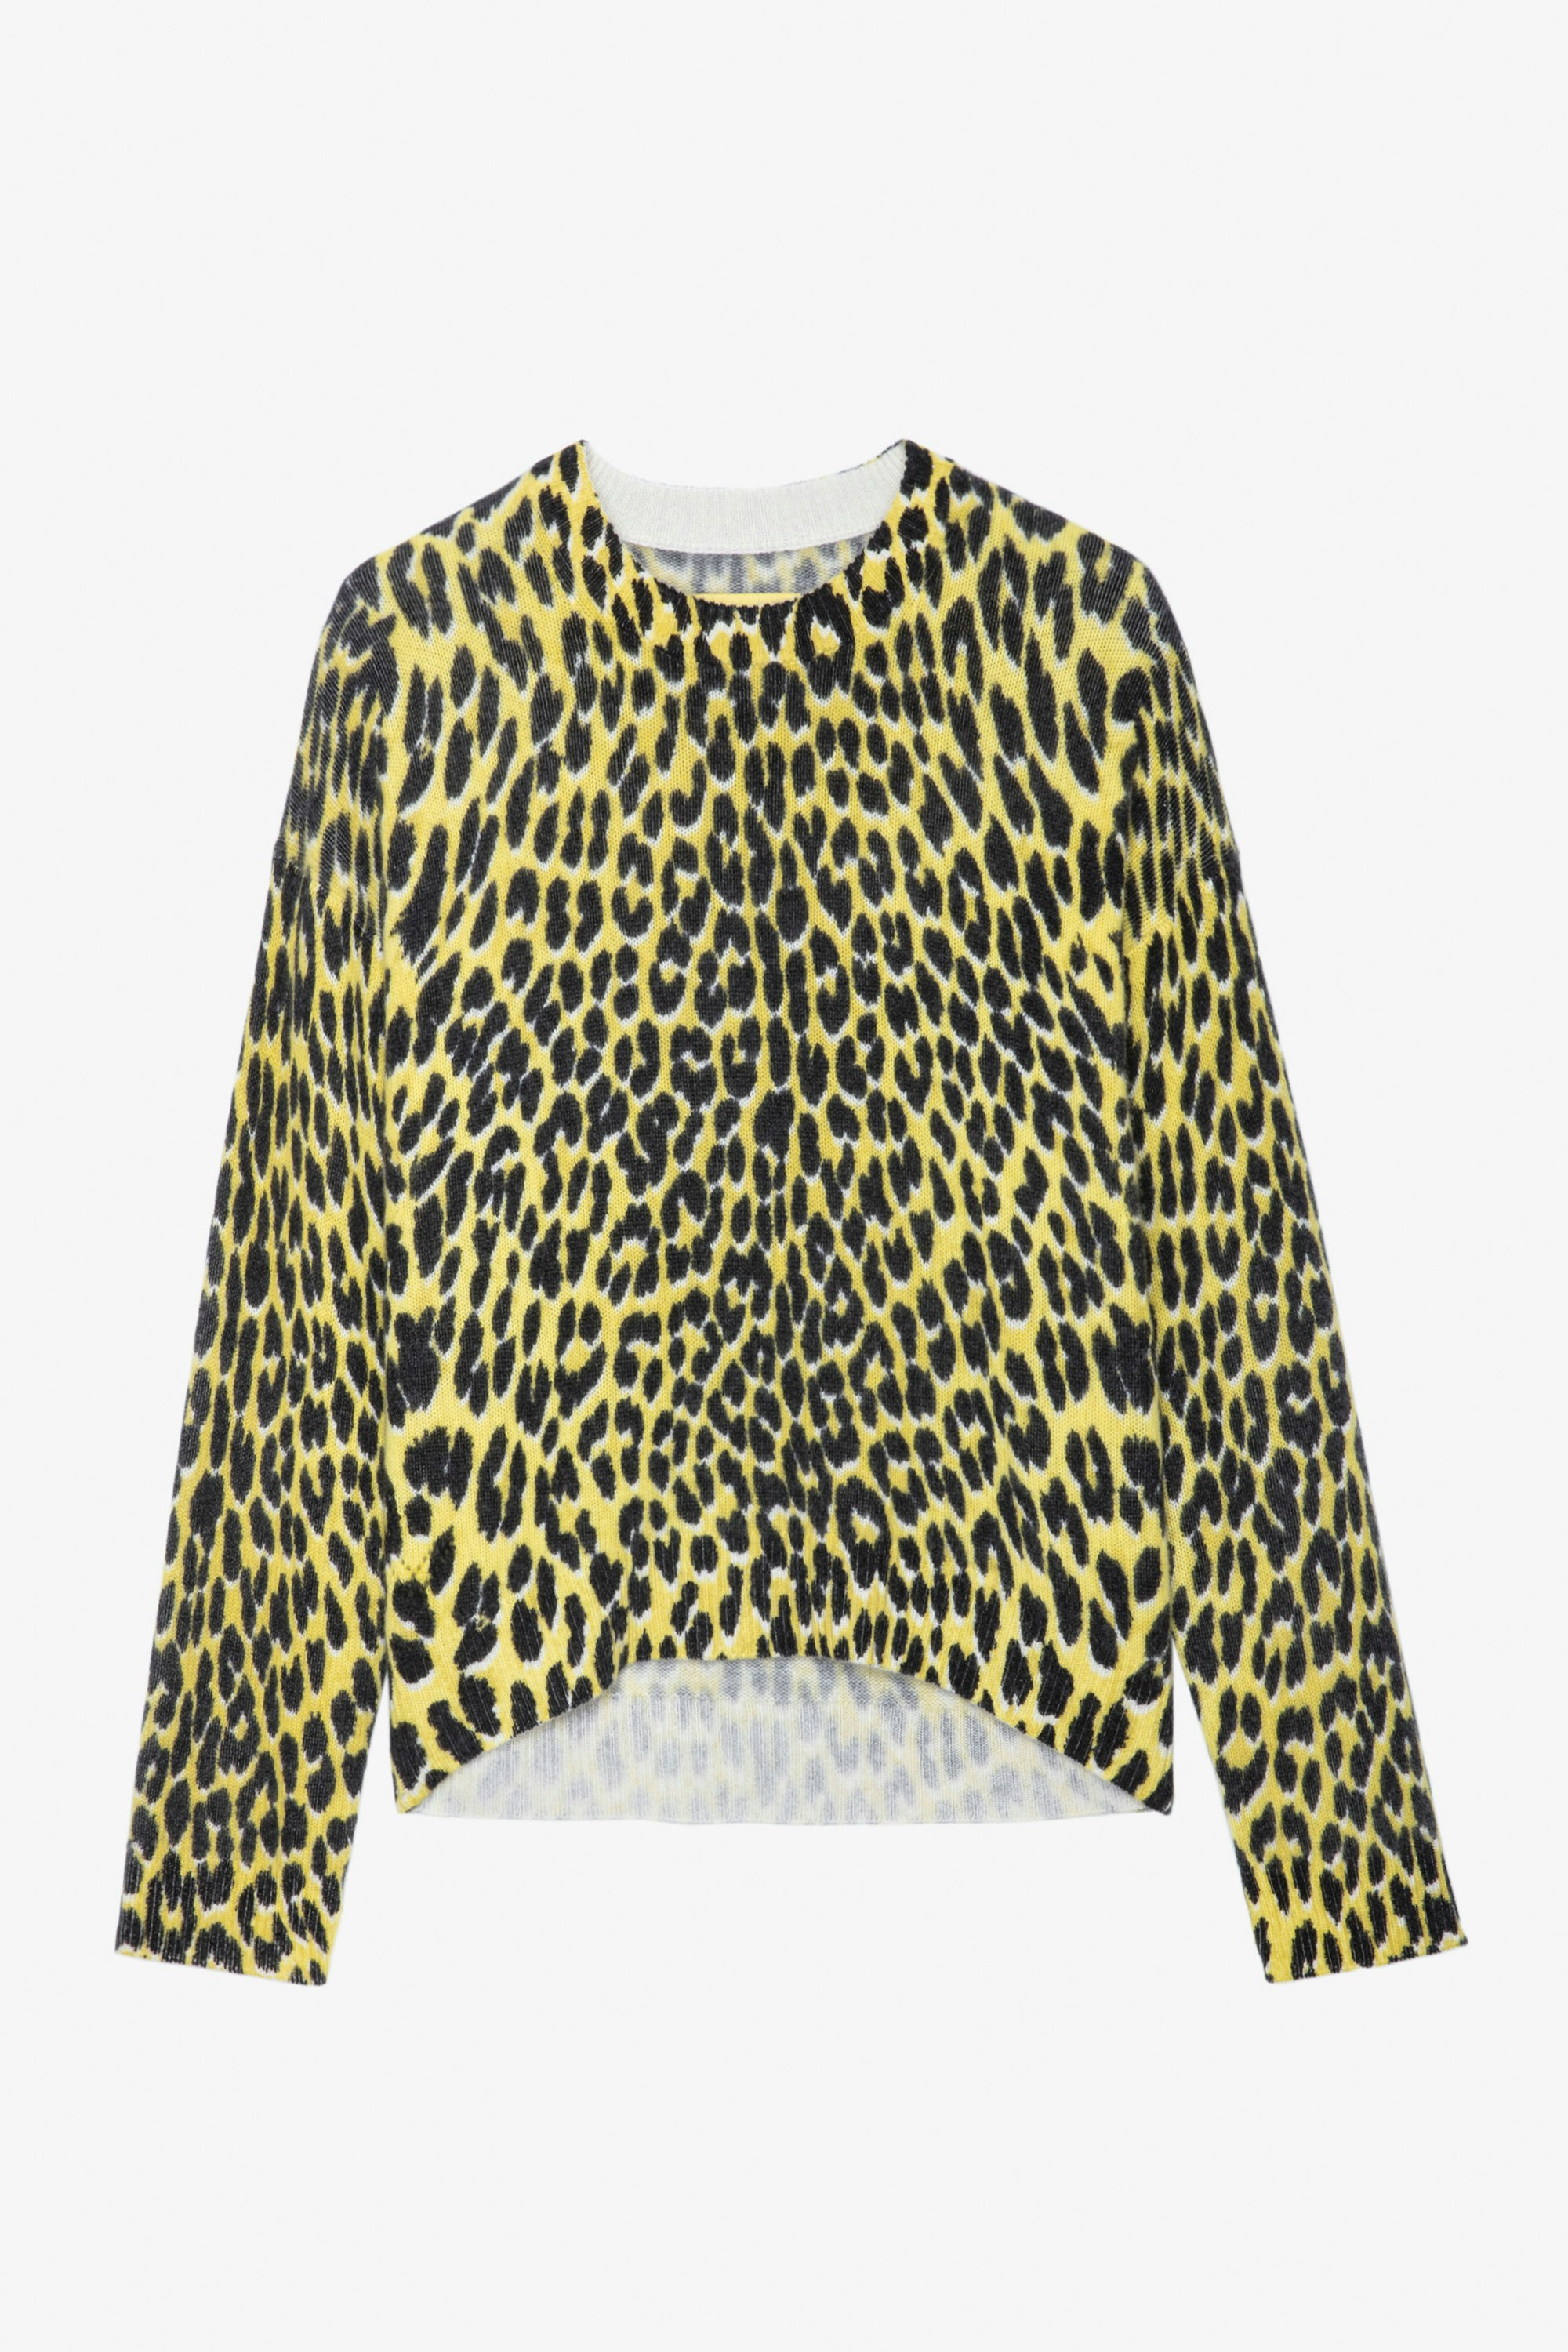 Markus Leopard Cashmere Jumper - Women’s yellow leopard-print cashmere jumper.